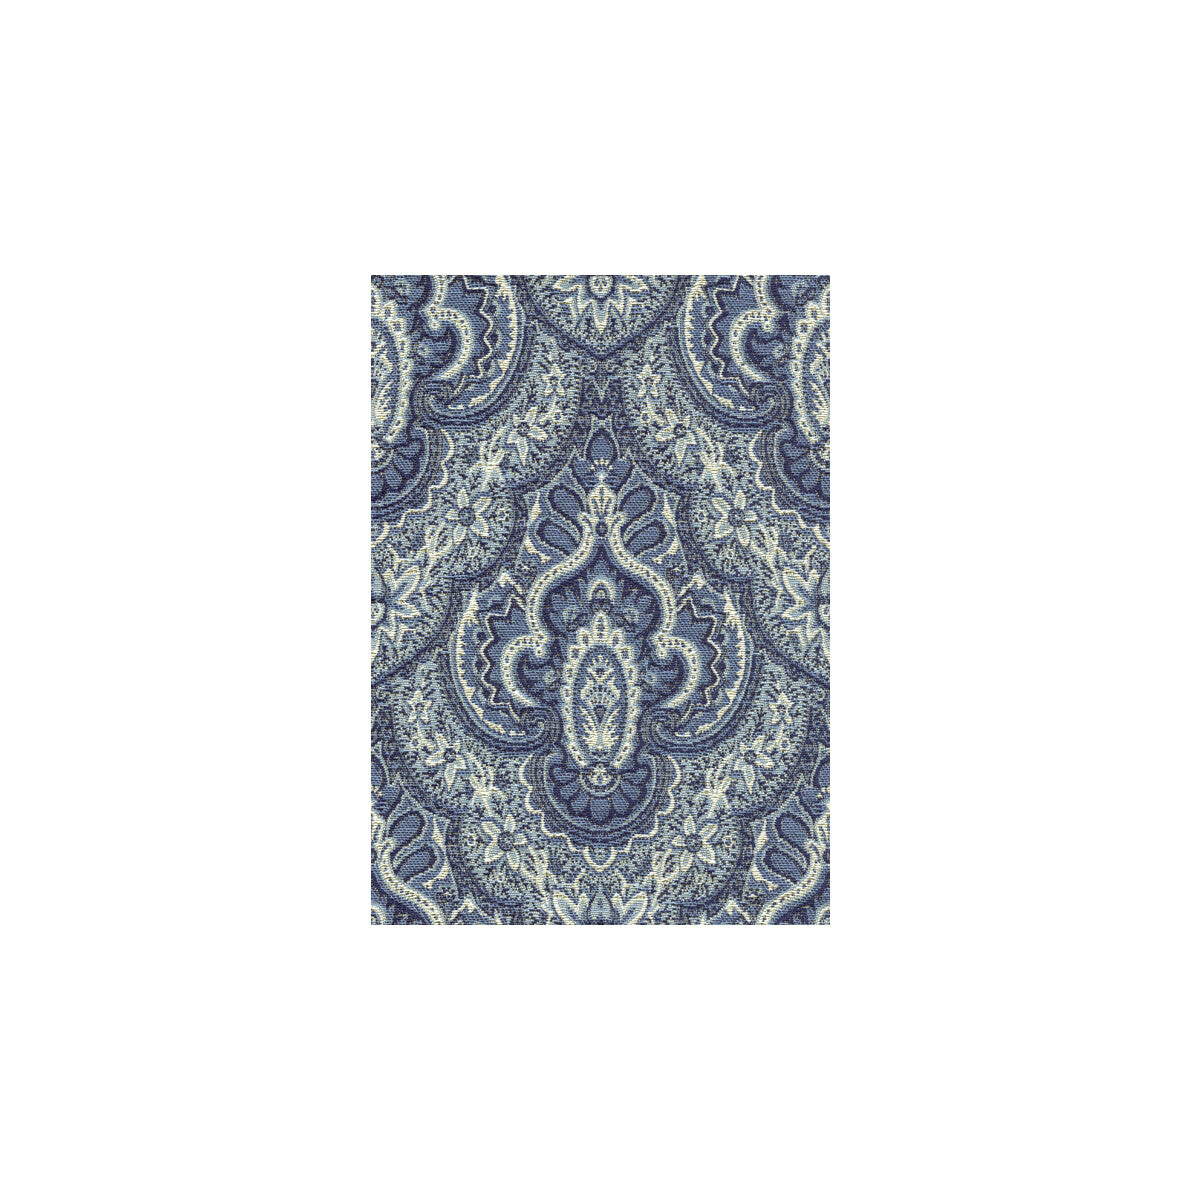 Kravet Design fabric in 31418-5 color - pattern 31418.5.0 - by Kravet Design in the Gis collection